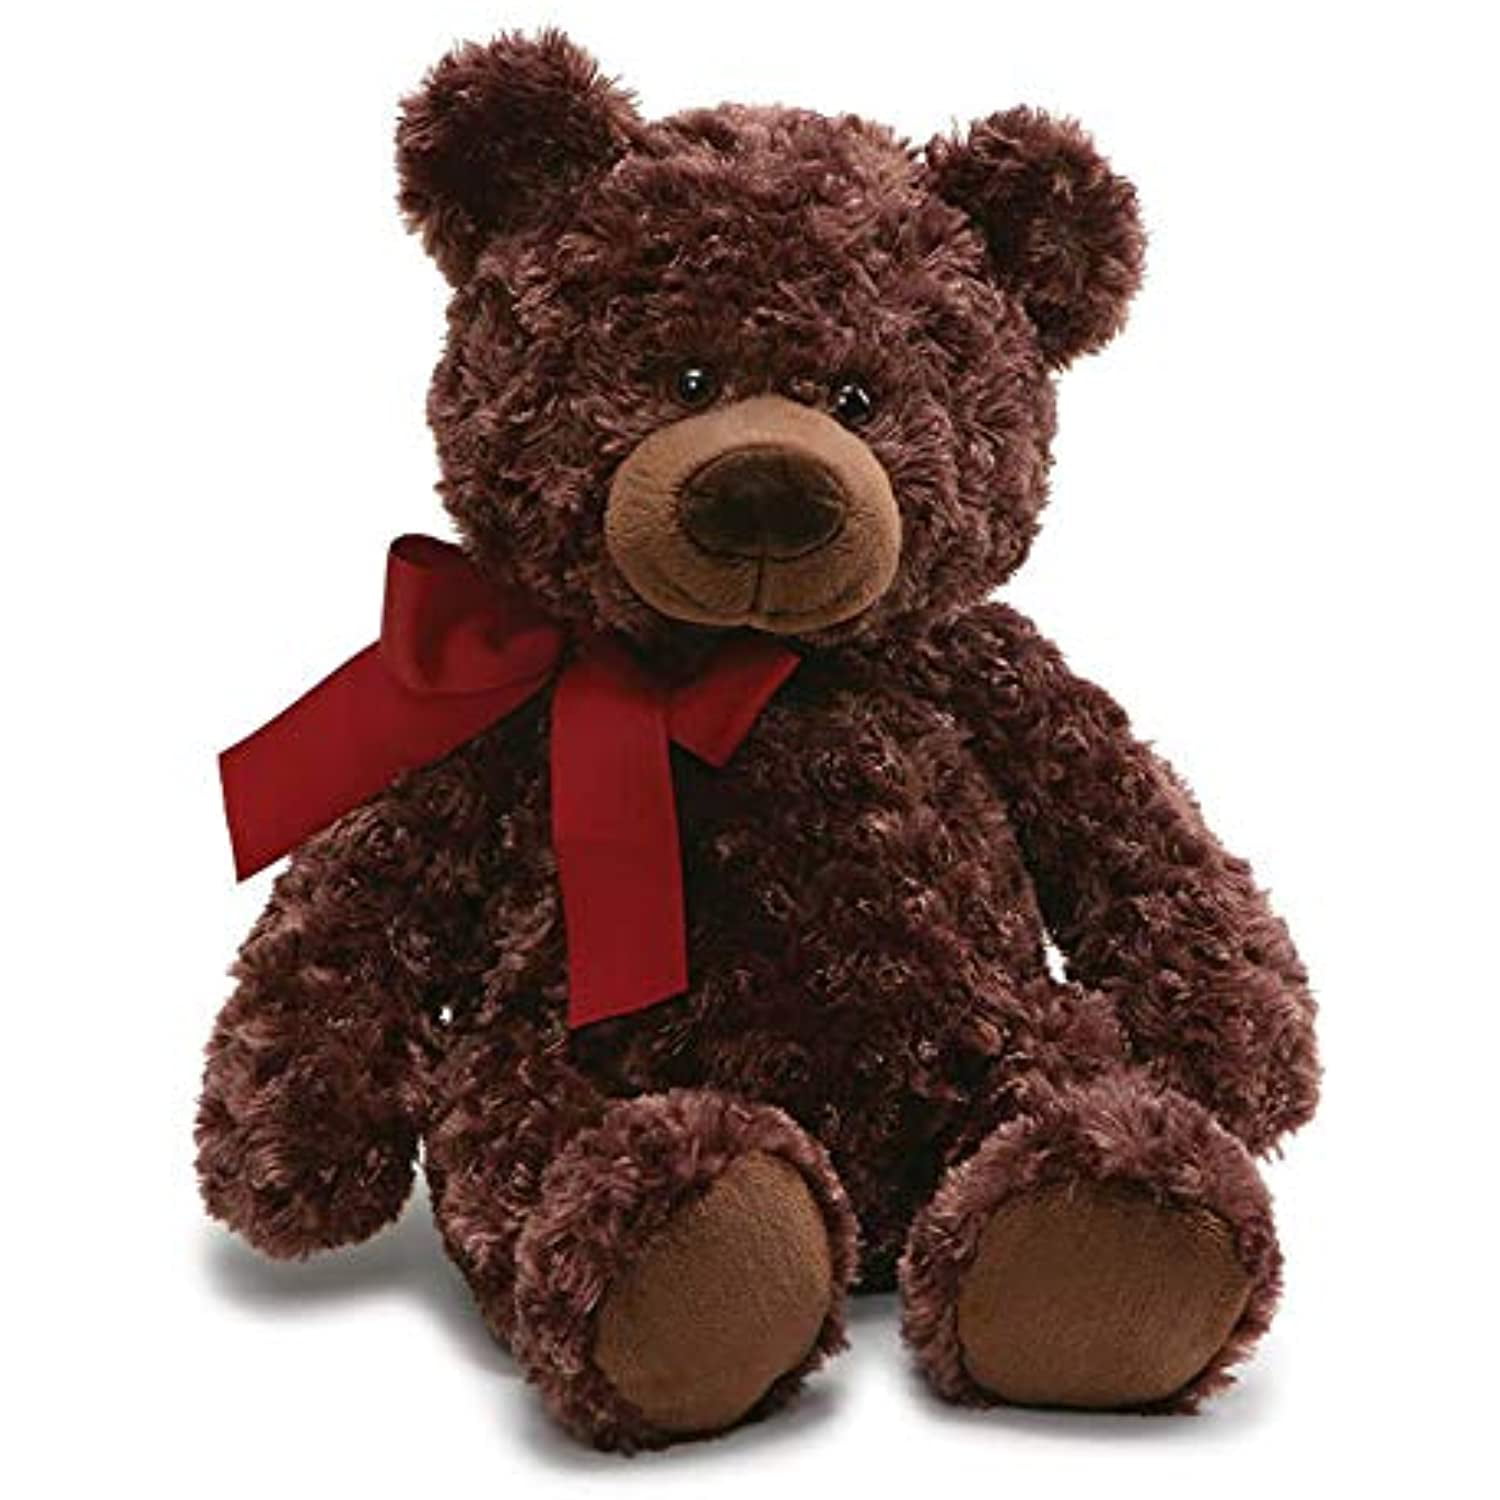 18" GUND Valentine's Day Hart Teddy Bear Stuffed Animal Chocolate Brown 